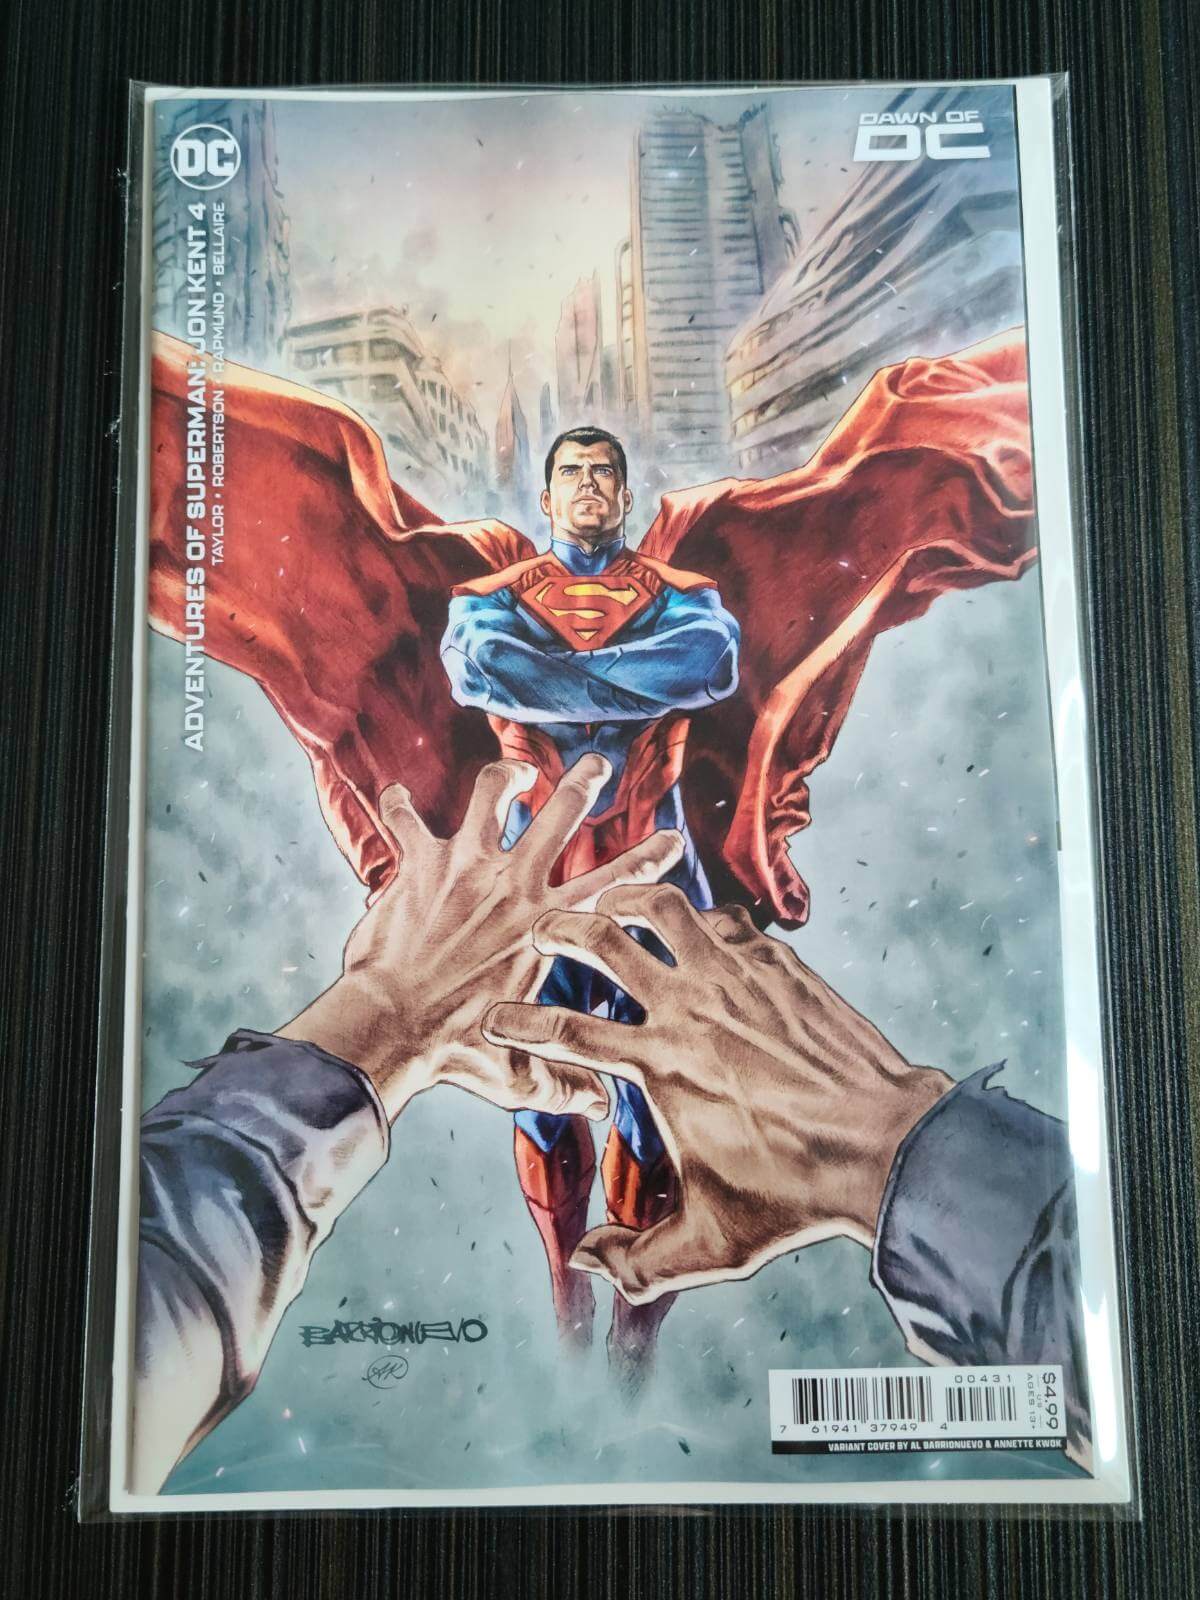 ADVENTURES OF SUPERMAN JON KENT #4 (OF 6) CVR C AL BARRIONUEVO CARD STOCK VAR